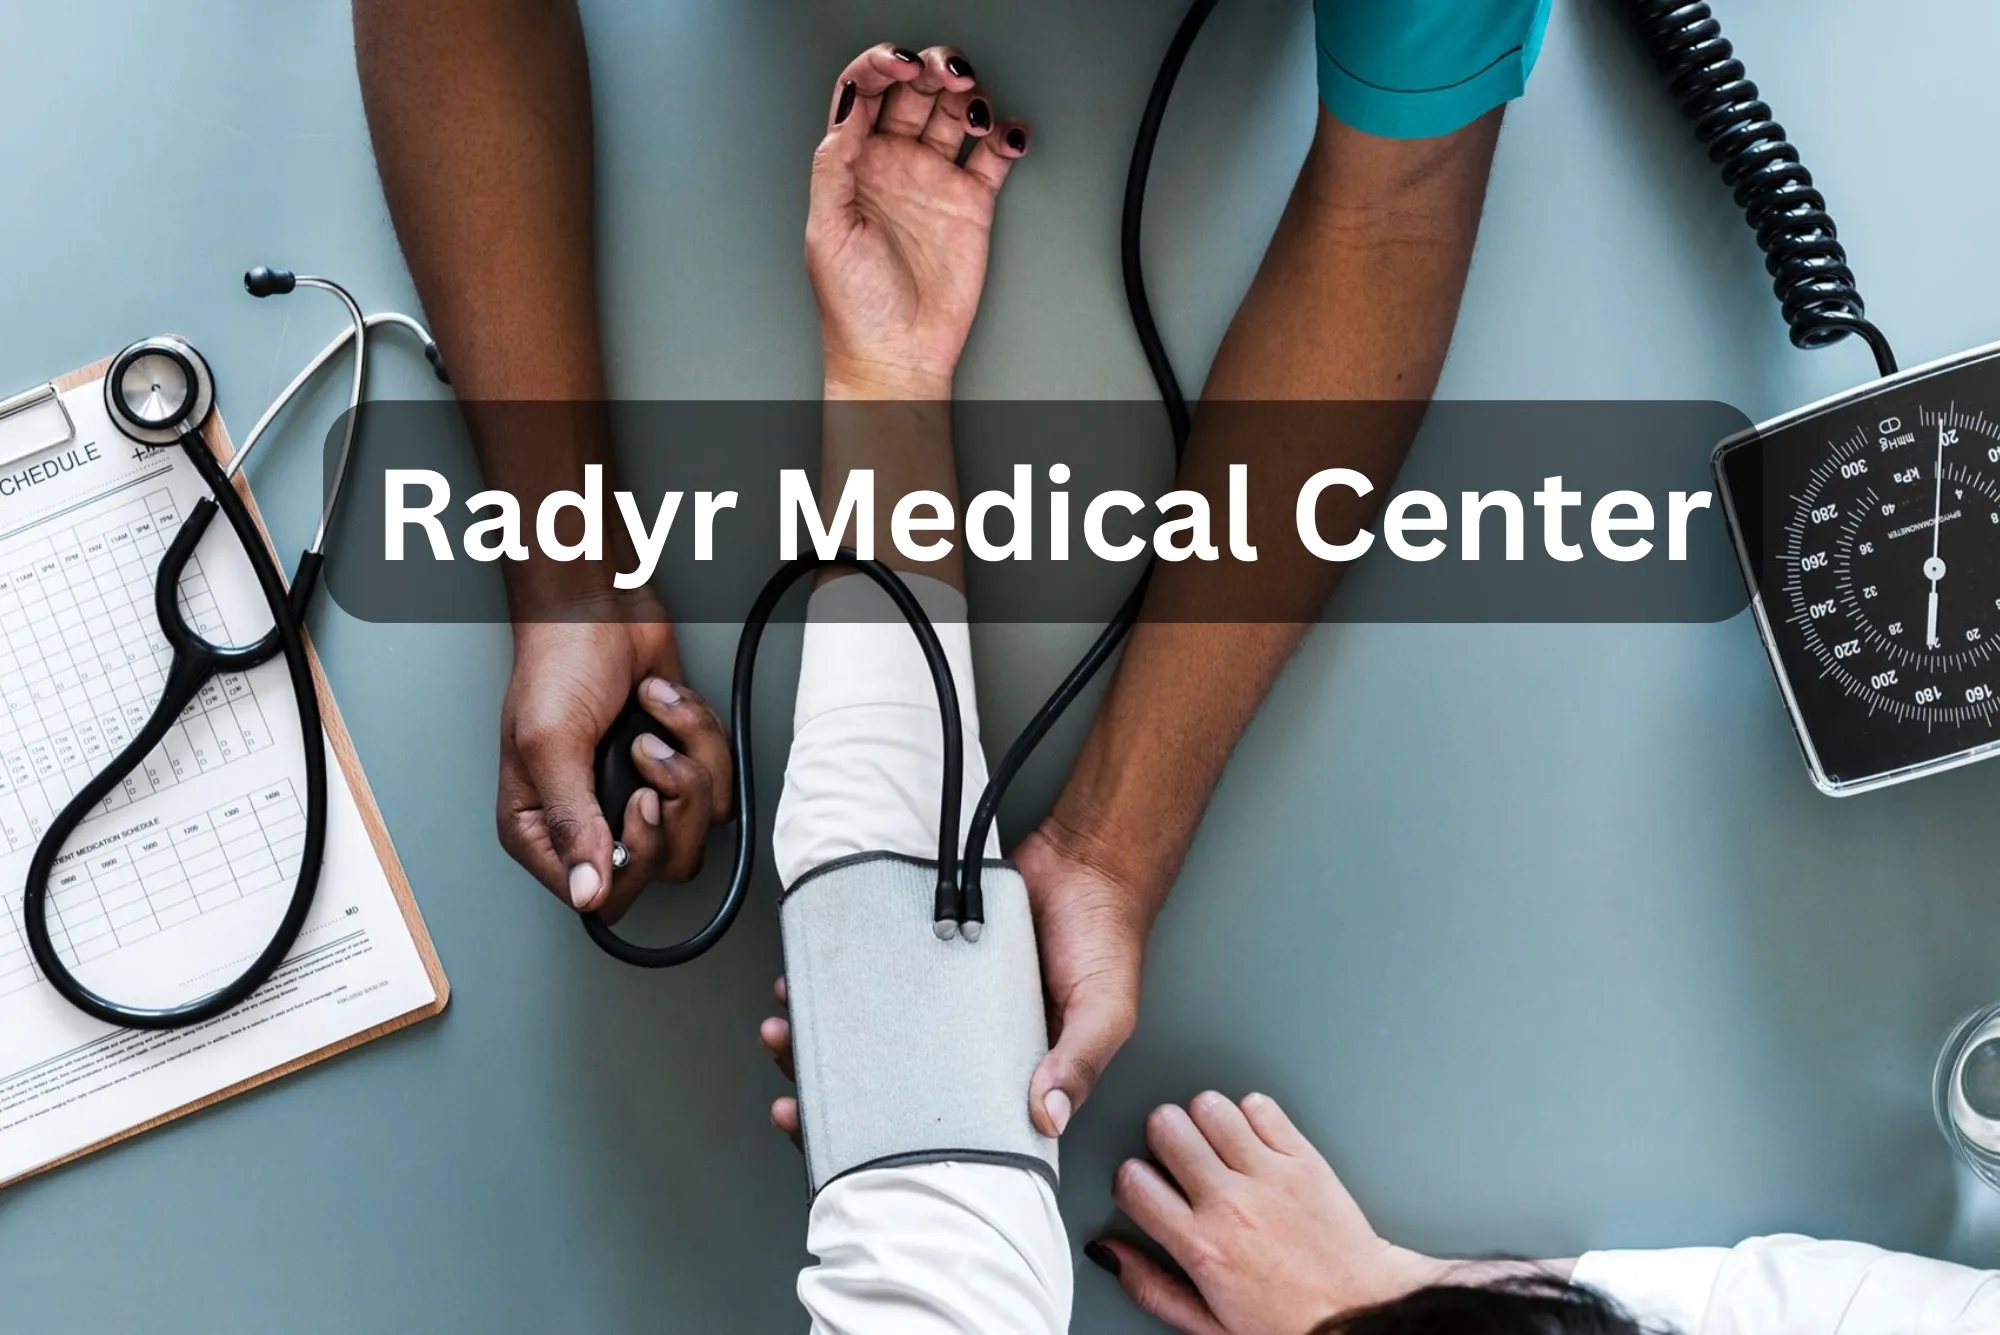 Radyr Medical Center